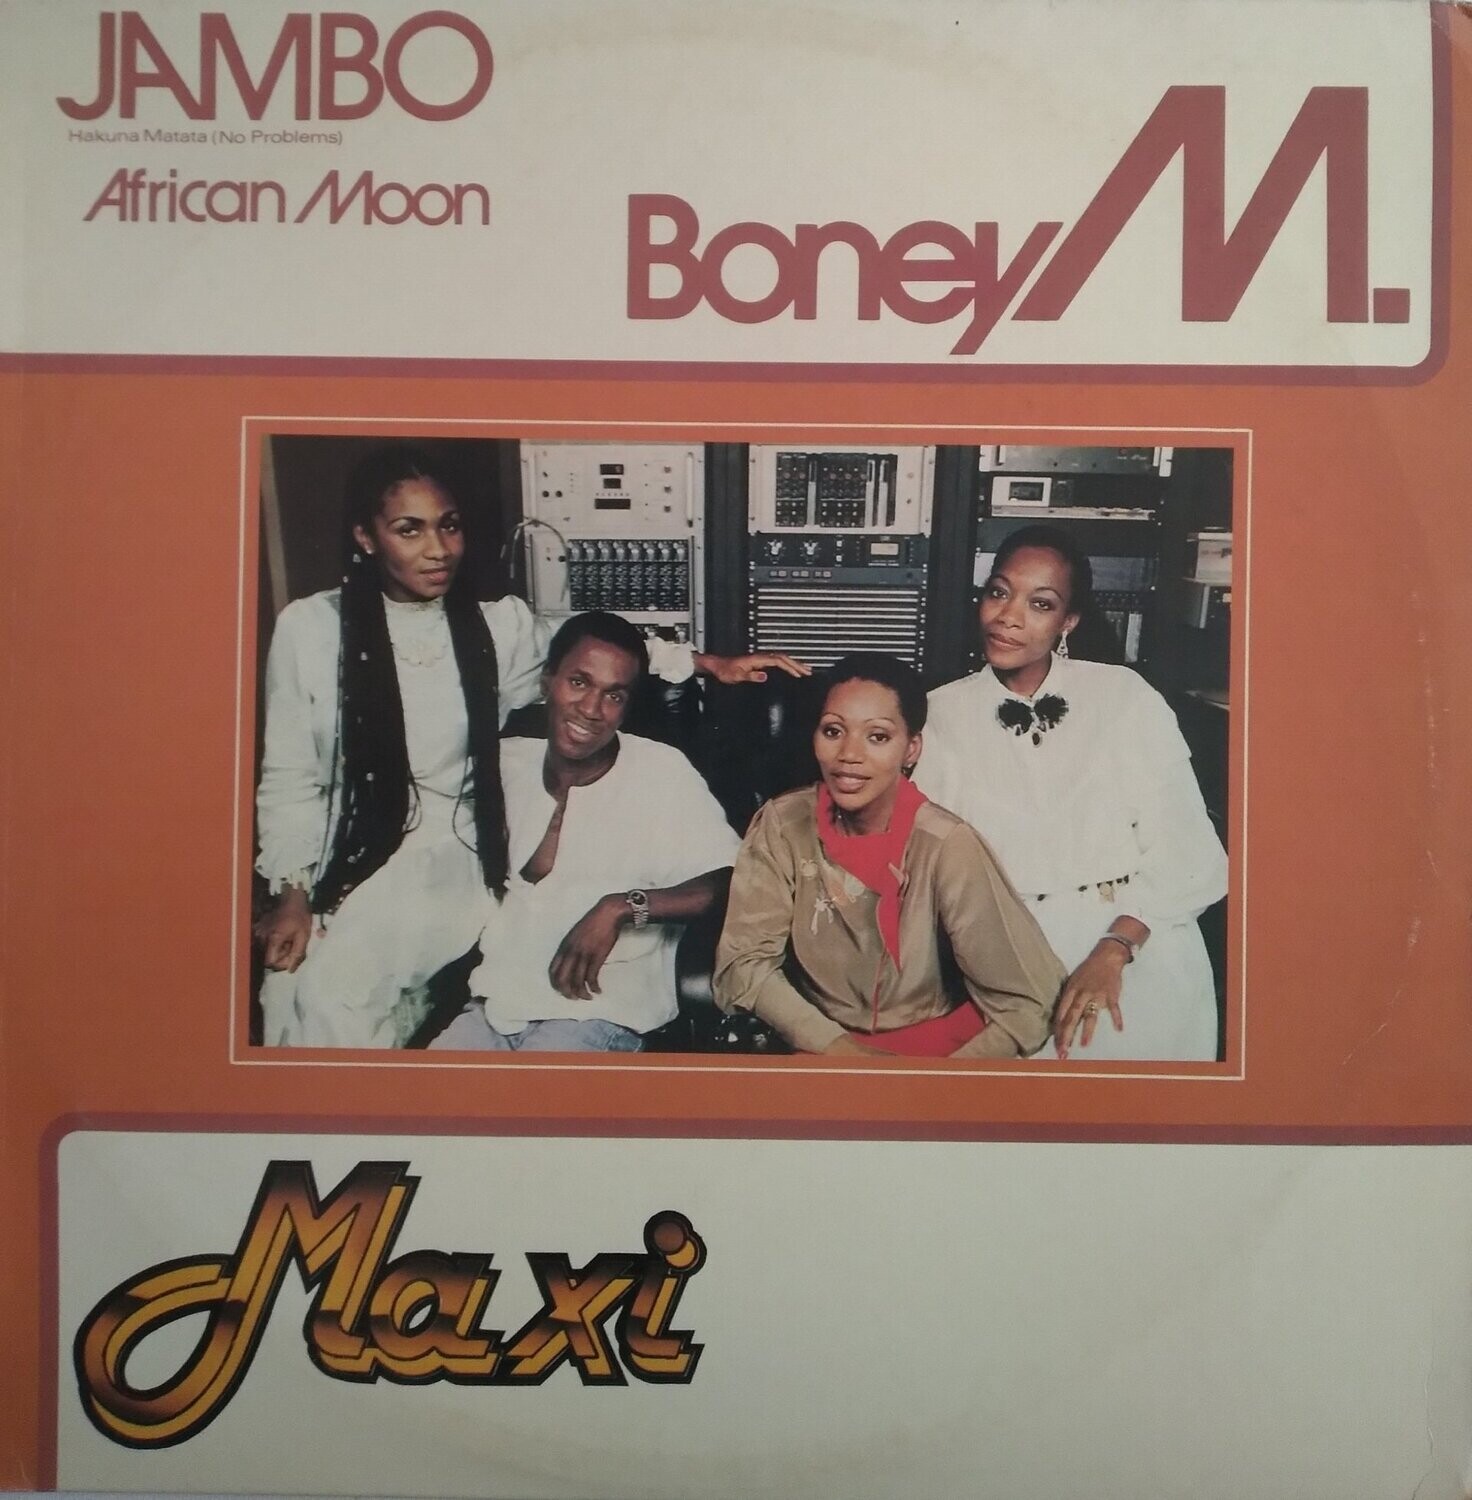 Boney M. – Jambo - Hakuna Matata (No Problems) 12" Maxi-Single [1983]